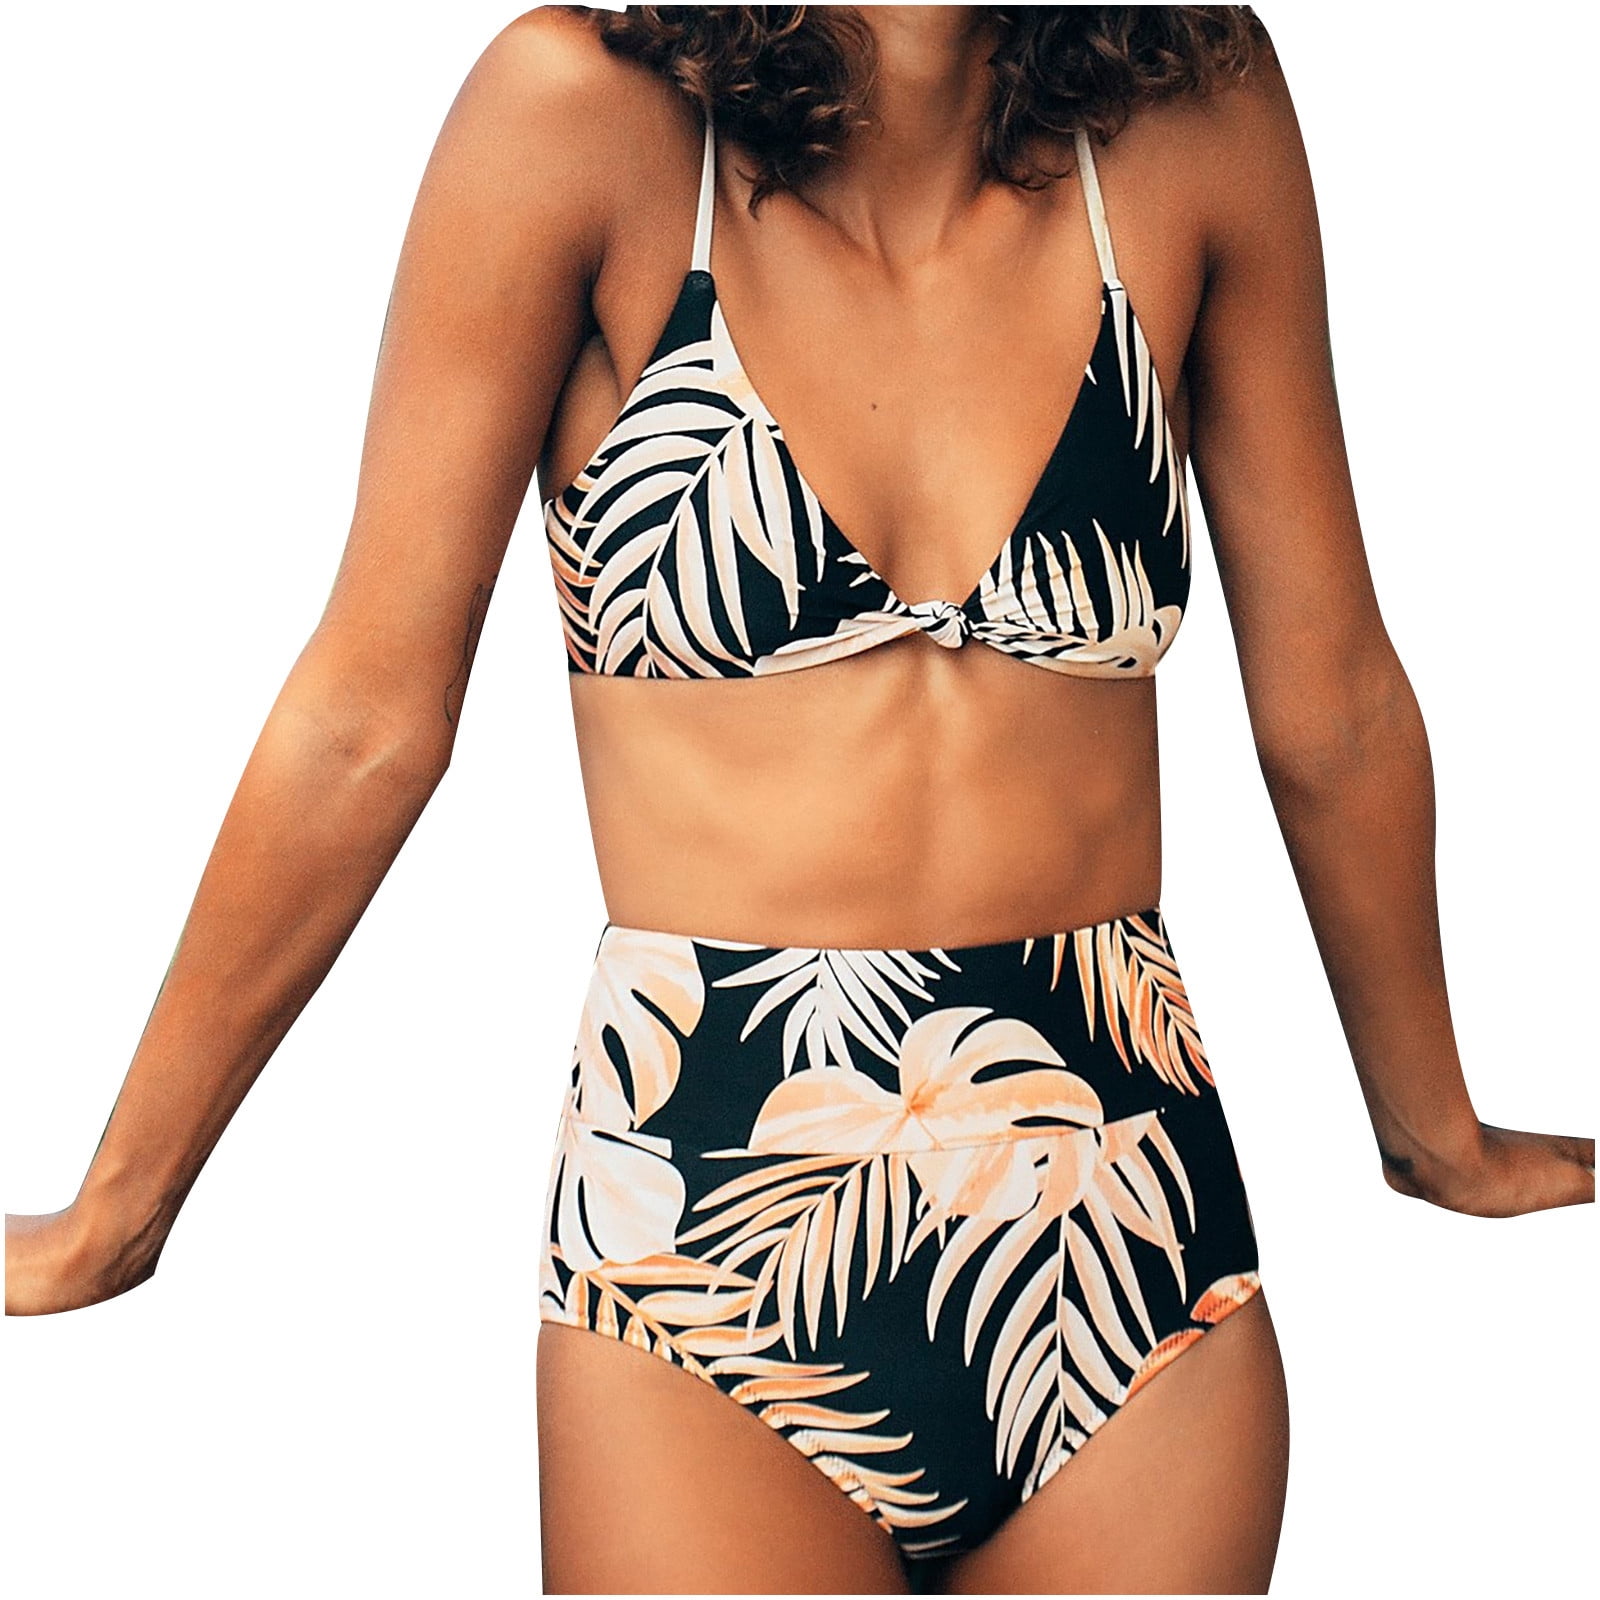 BLENCOT Women Fruit Print Swimwear Ruffled Detail High Waist Bikini Set Swimsuit